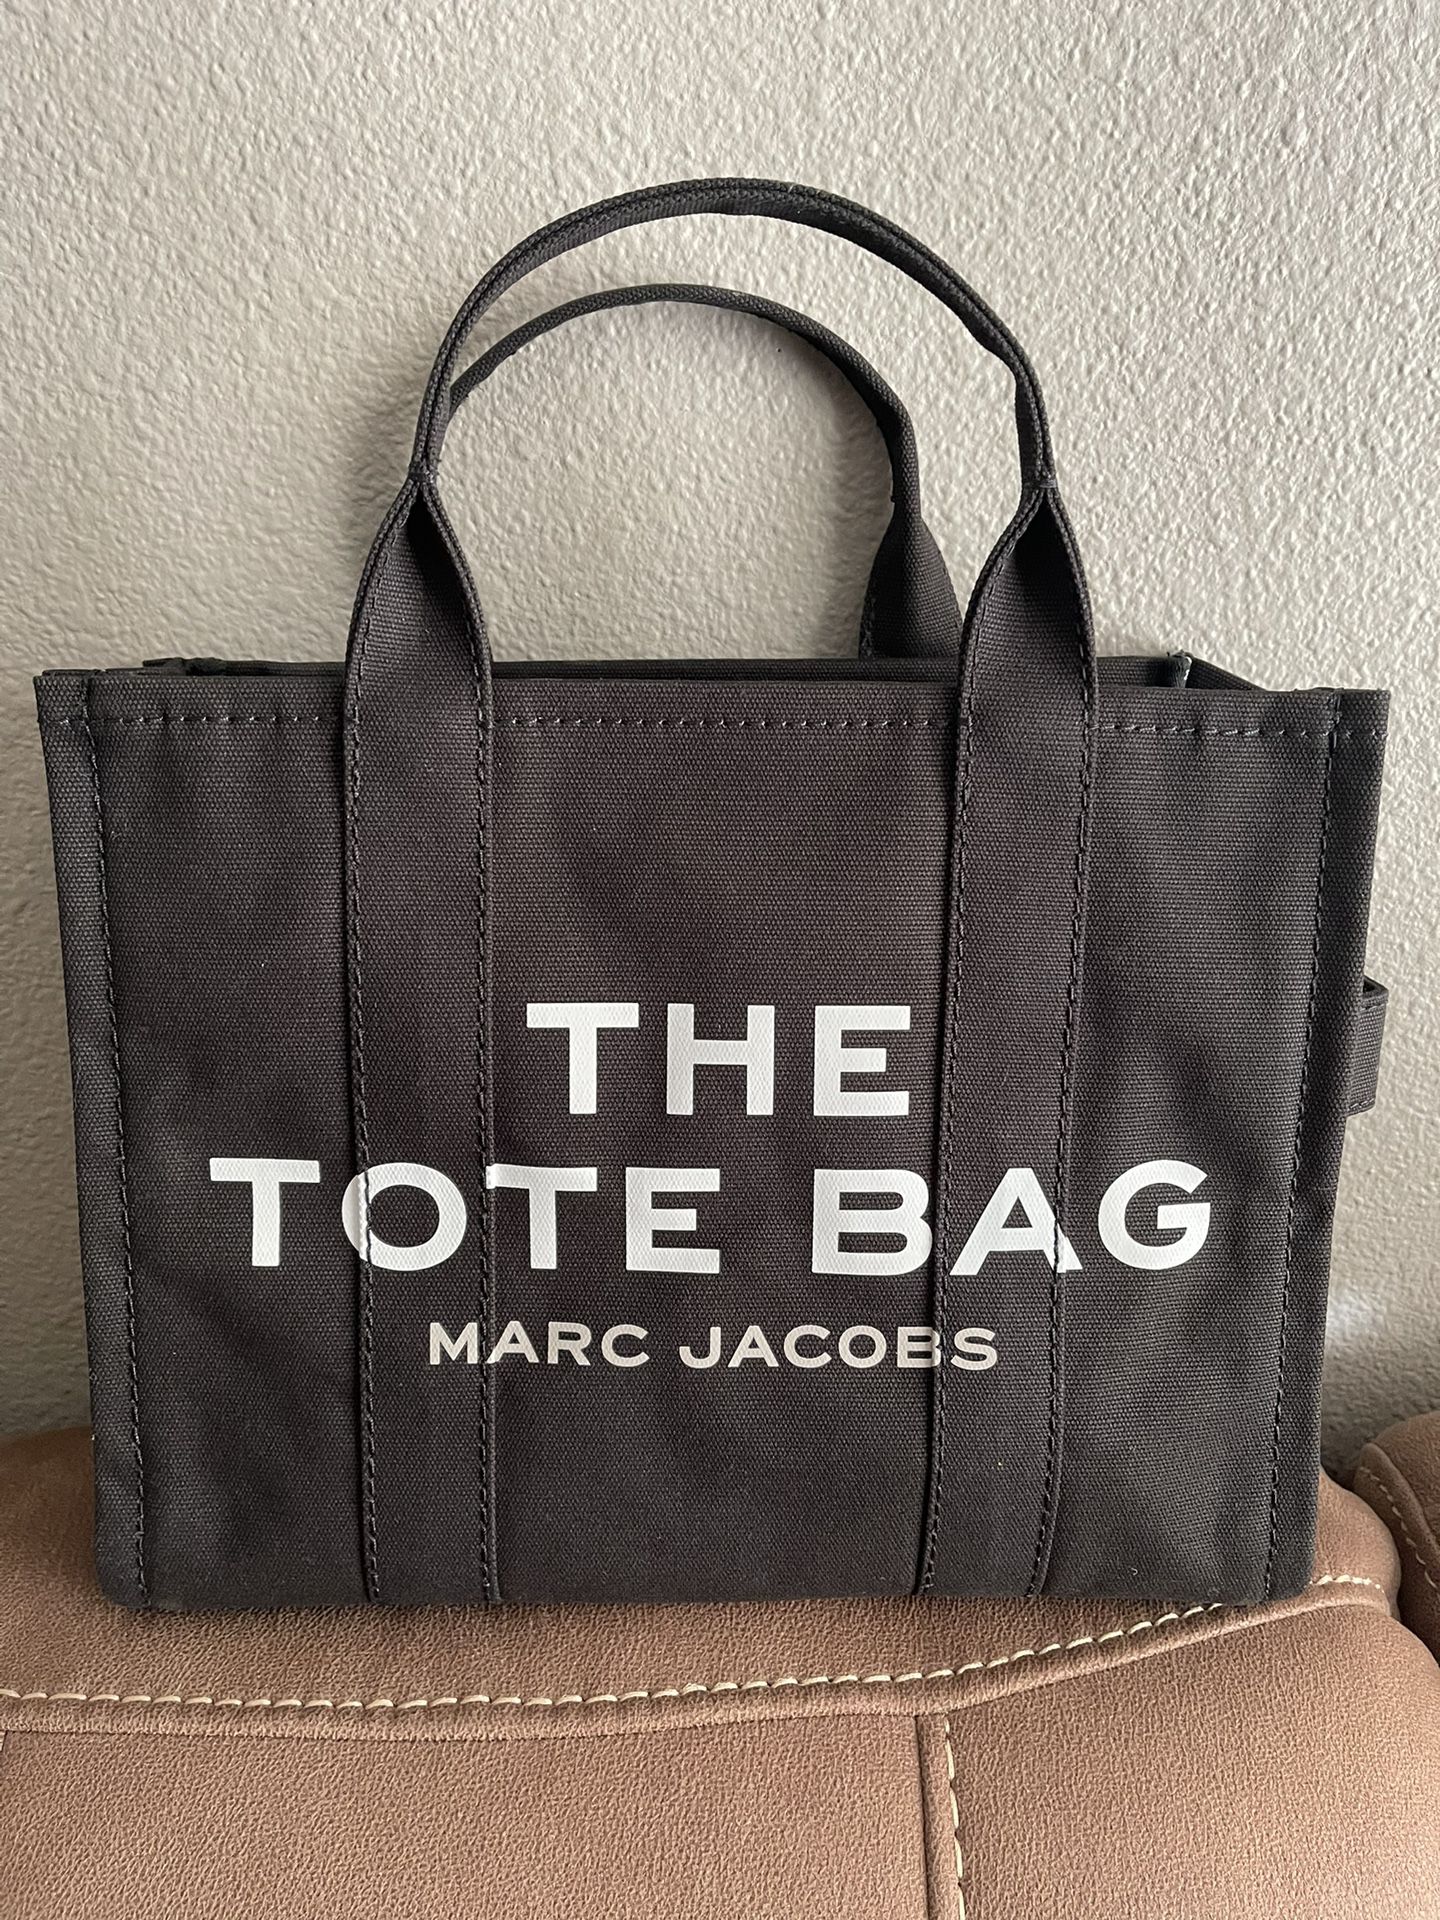 The Tote Bag Medium Marc Jacobs Black Color.